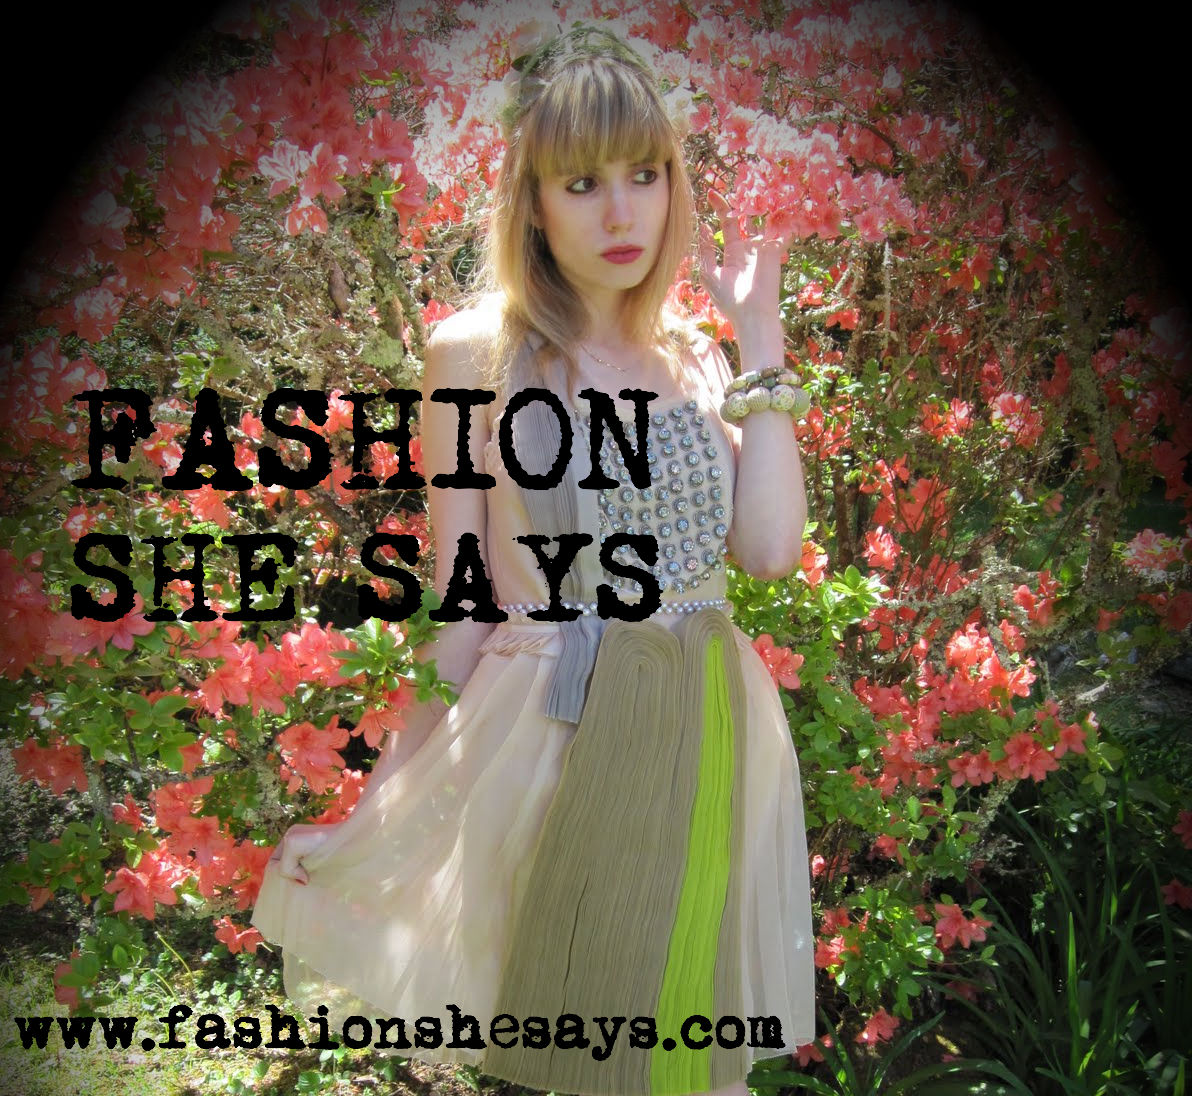 Fashion She Says